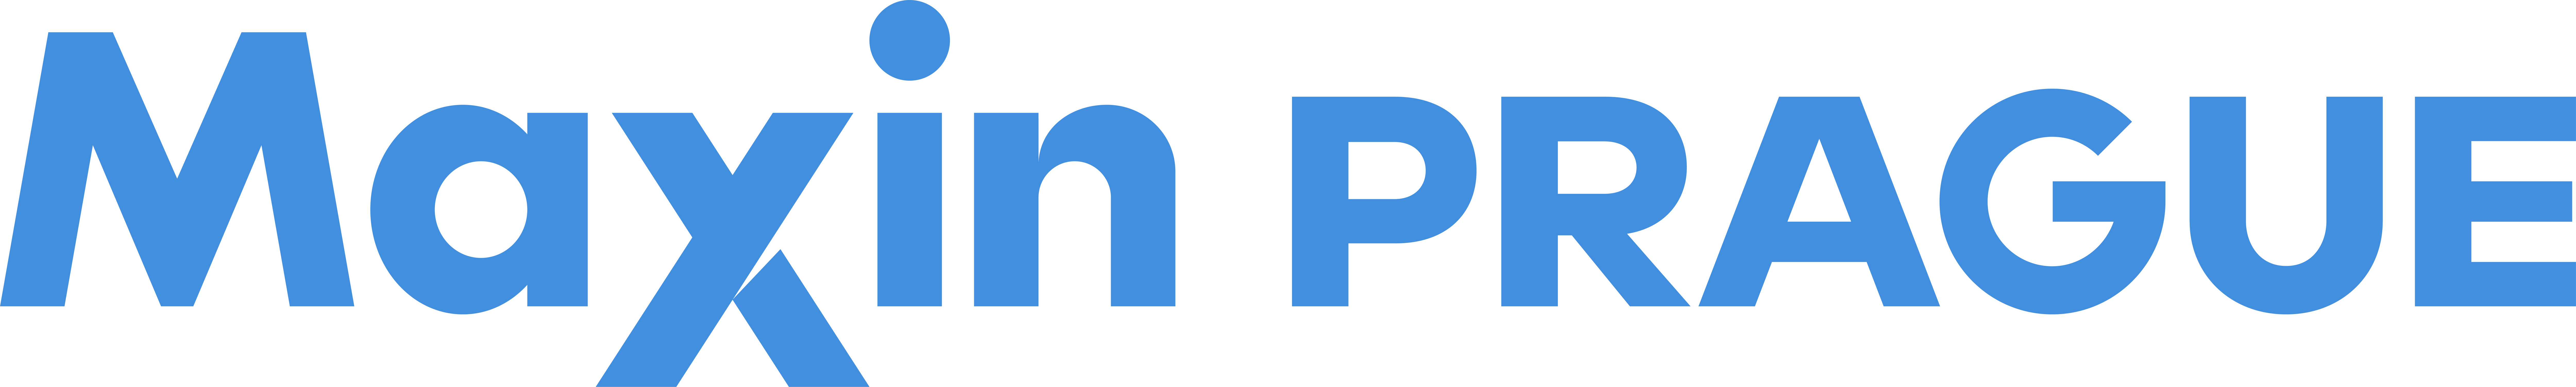 Maxin Prague logo blue UNIV JPG